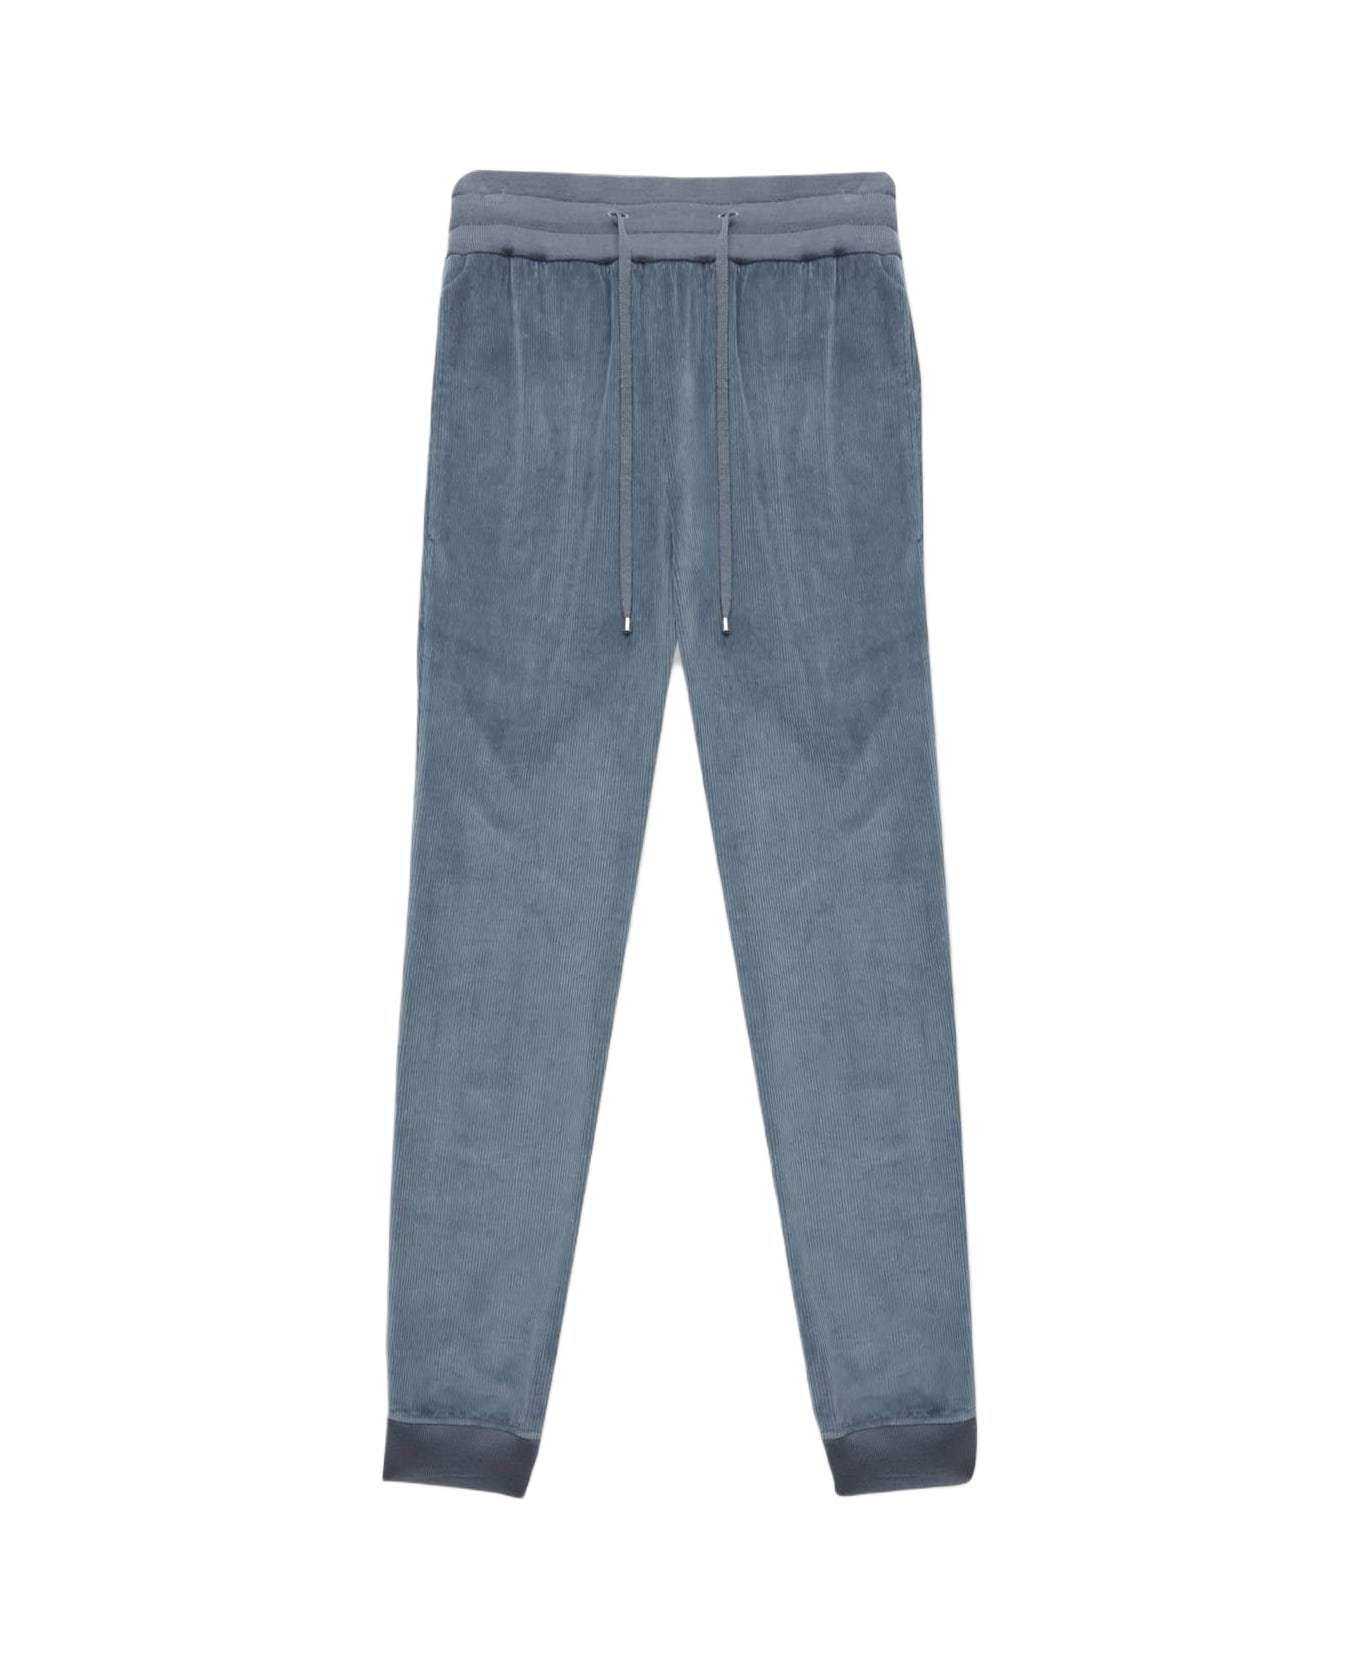 Larusmiani Tracksuit Trousers 'philly' Pants - LightBlue スウェットパンツ